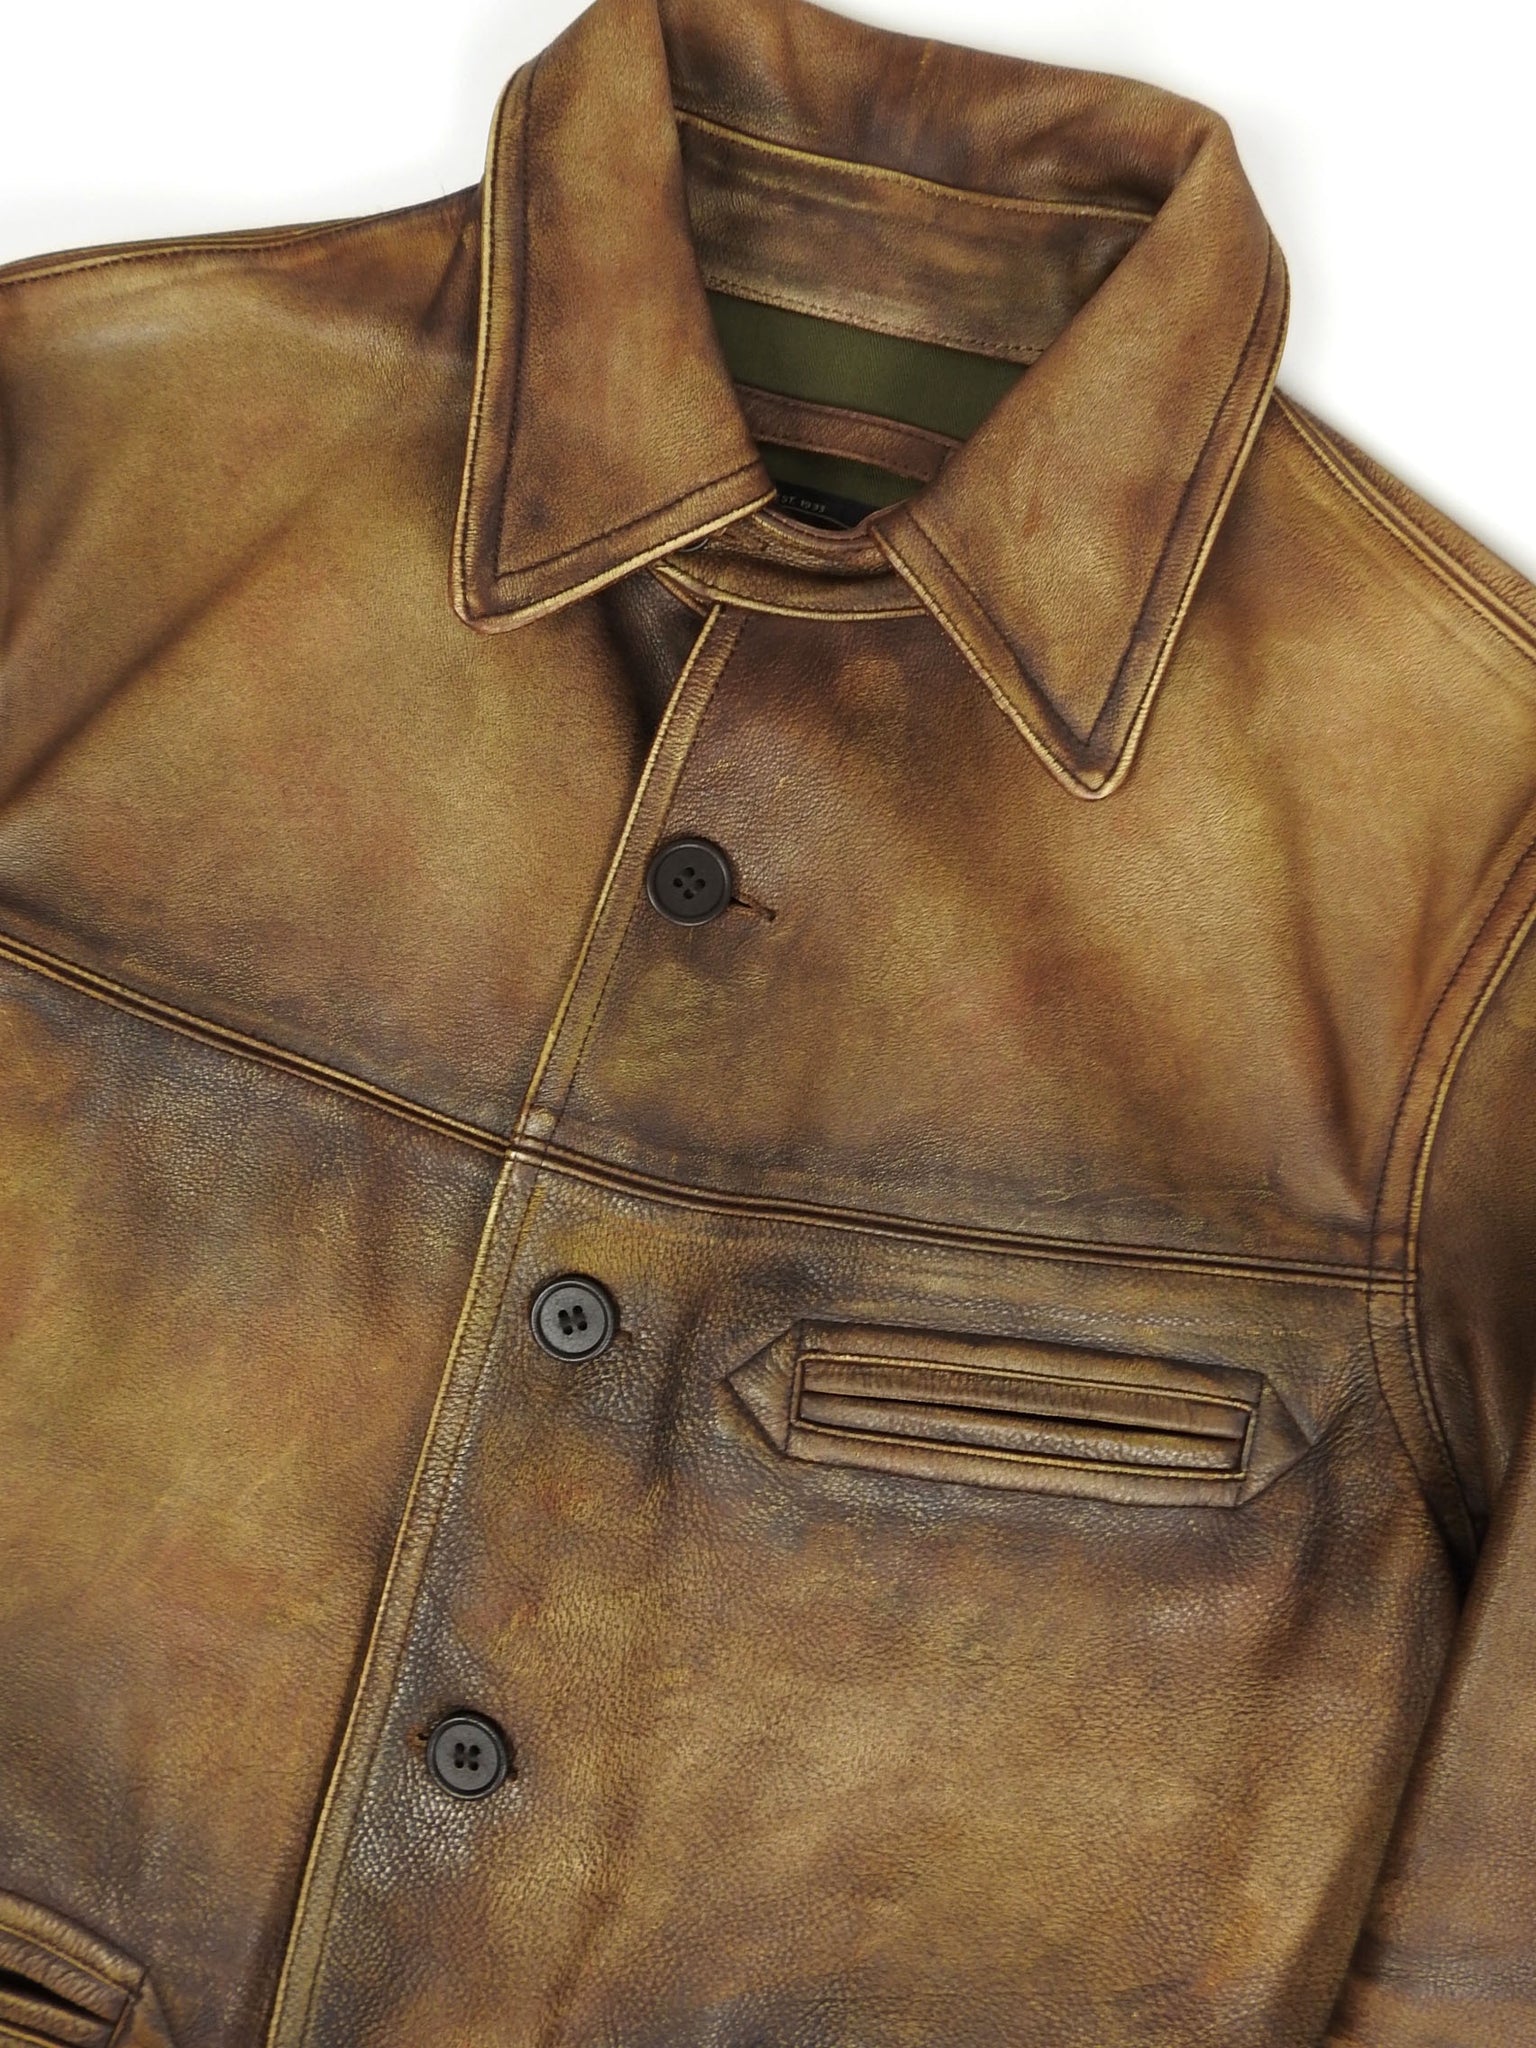 RRL & Co Brown Leather Jacket Size Medium – I Miss You MAN